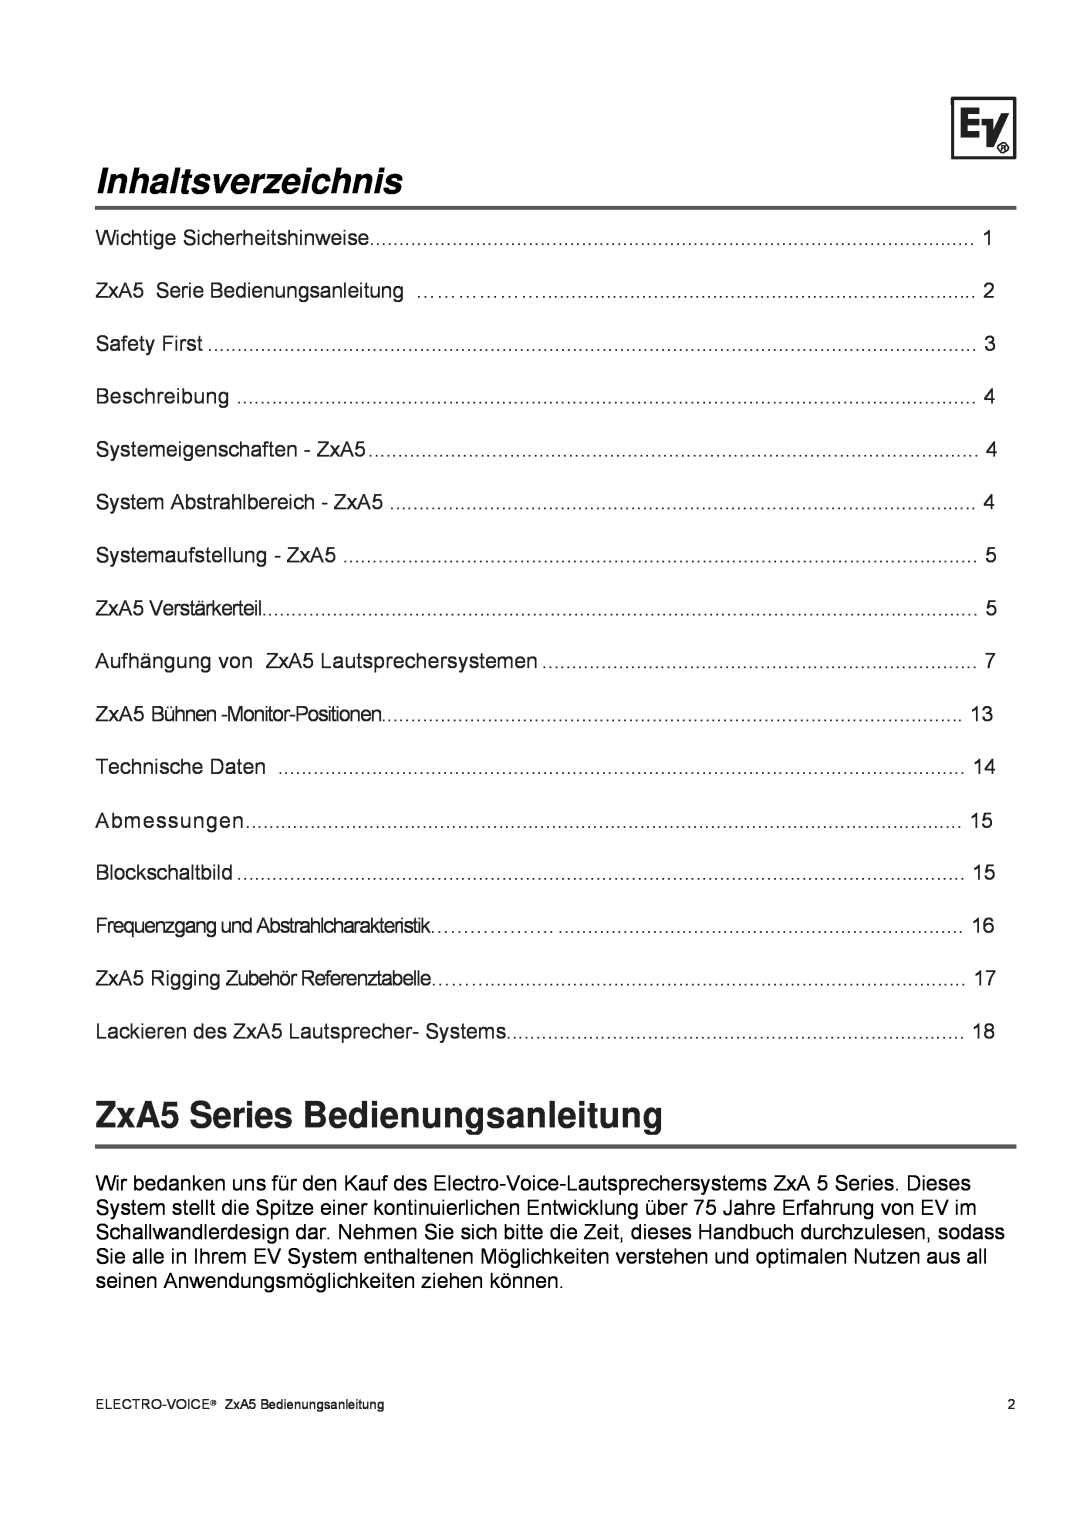 Pentax ZXA5-90, ZXA5-60 owner manual ZxA5 Series Bedienungsanleitung, Inhaltsverzeichnis 